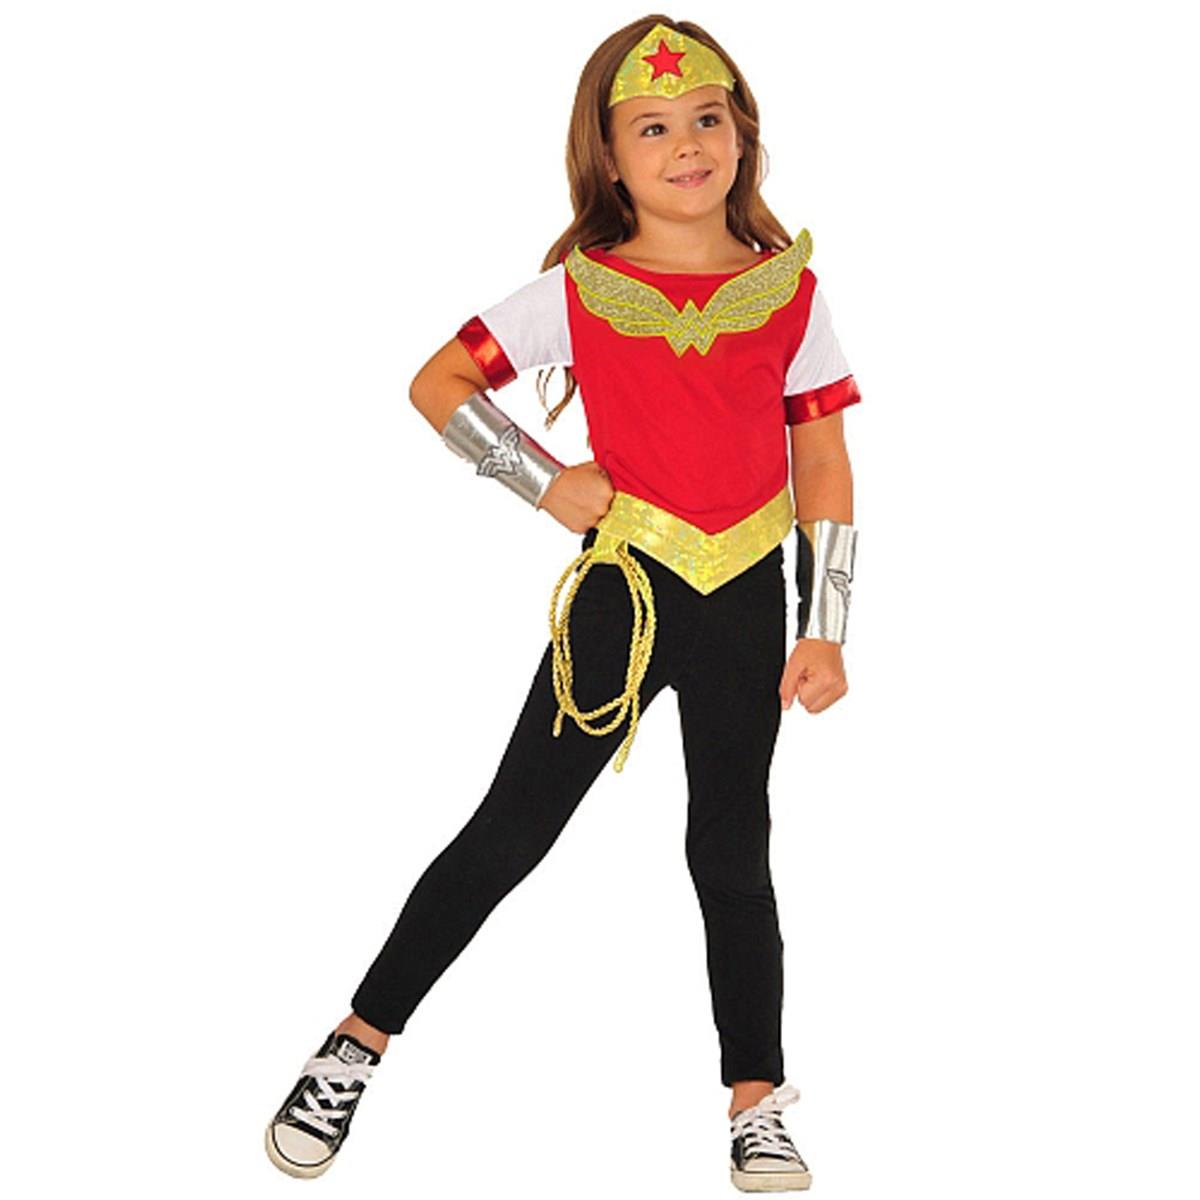 277772 Dc Superhero Girls Wonder Woman Dress Up Set, Small